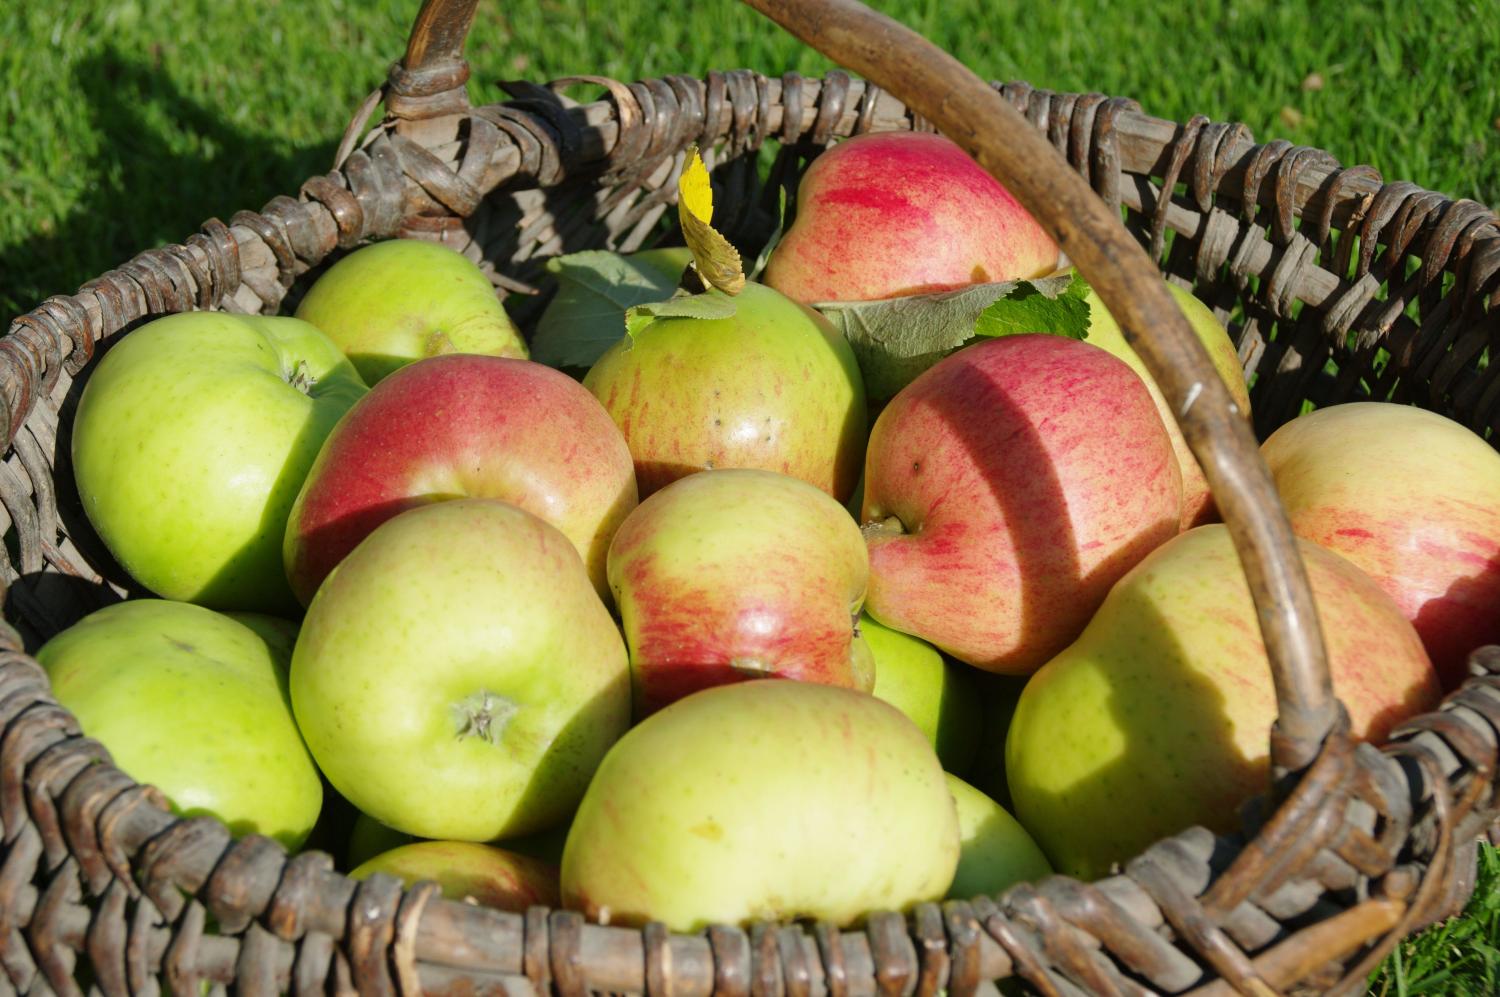 apple-basket